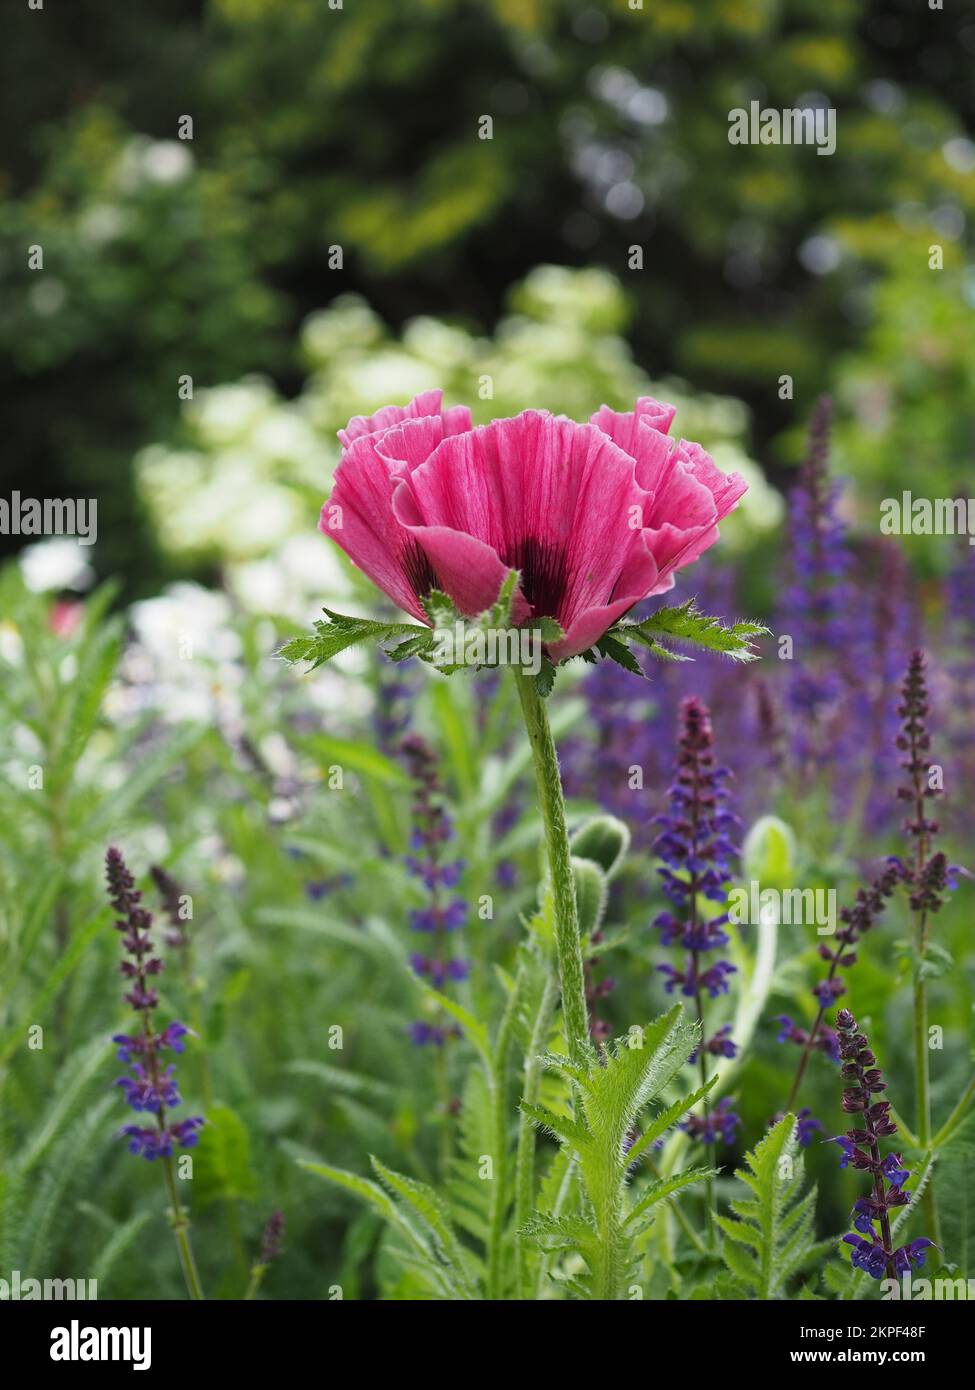 Tall Papaver orientale 'Patty's Plum' poppy in a summer garden border Stock Photo